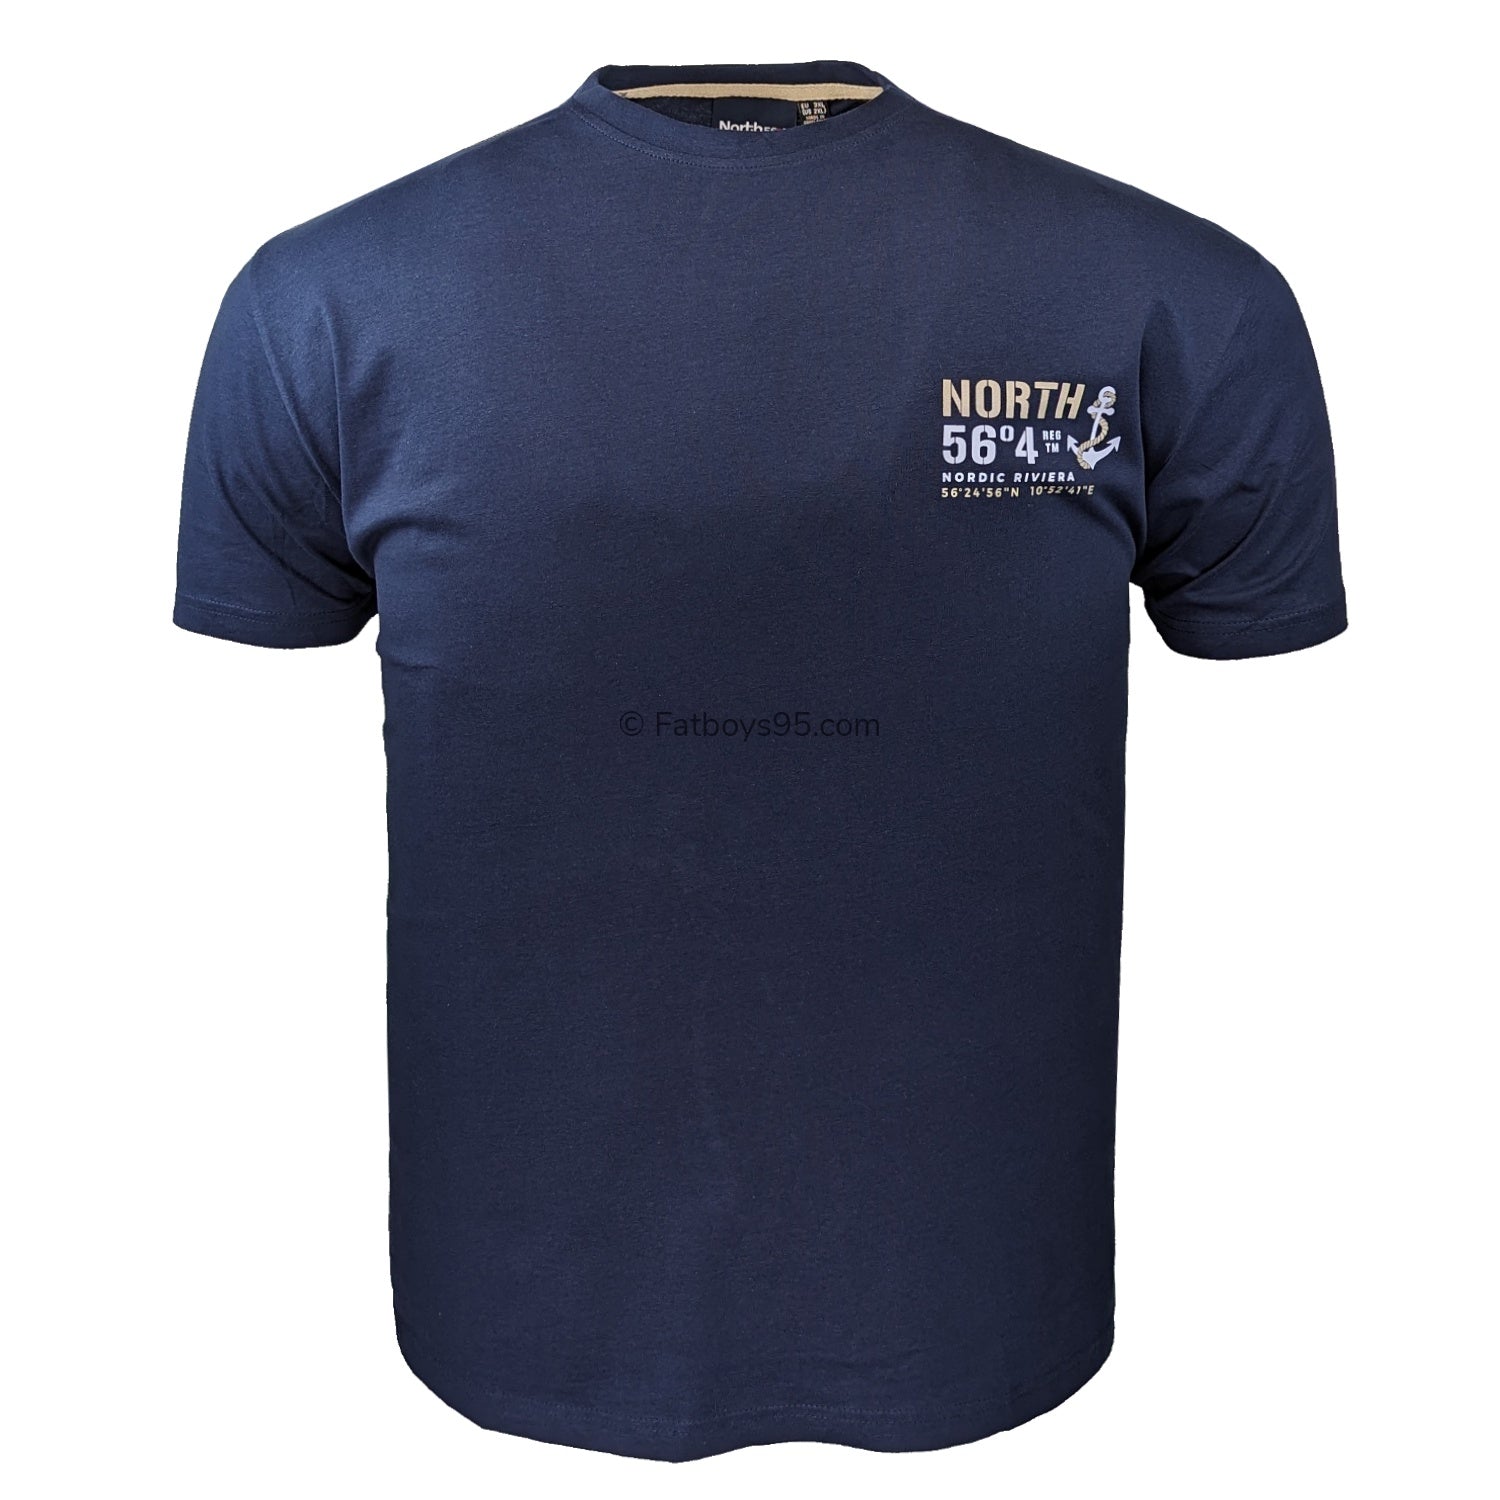 North 56°4 T-Shirt - 41144 - Navy Blue 1